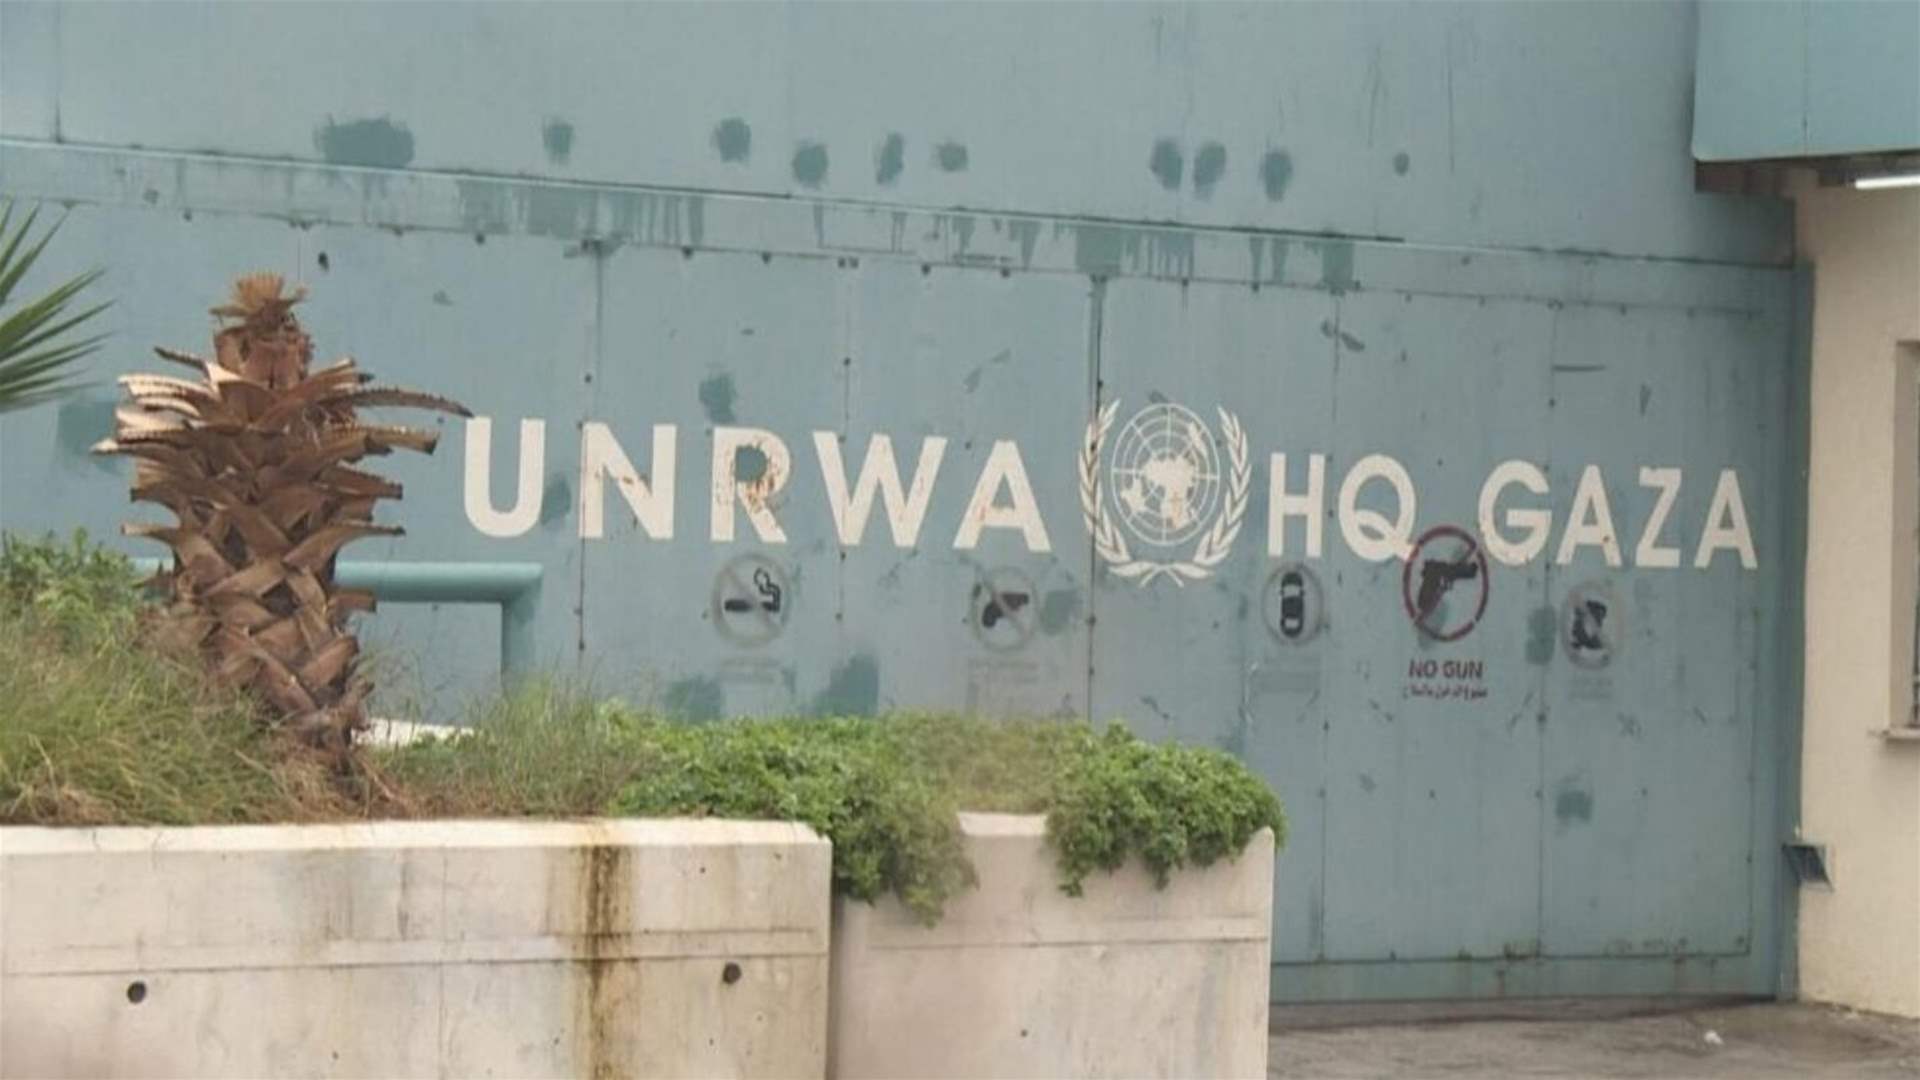 Spain plans to send additional aid worth &euro;3.5 million to UNRWA